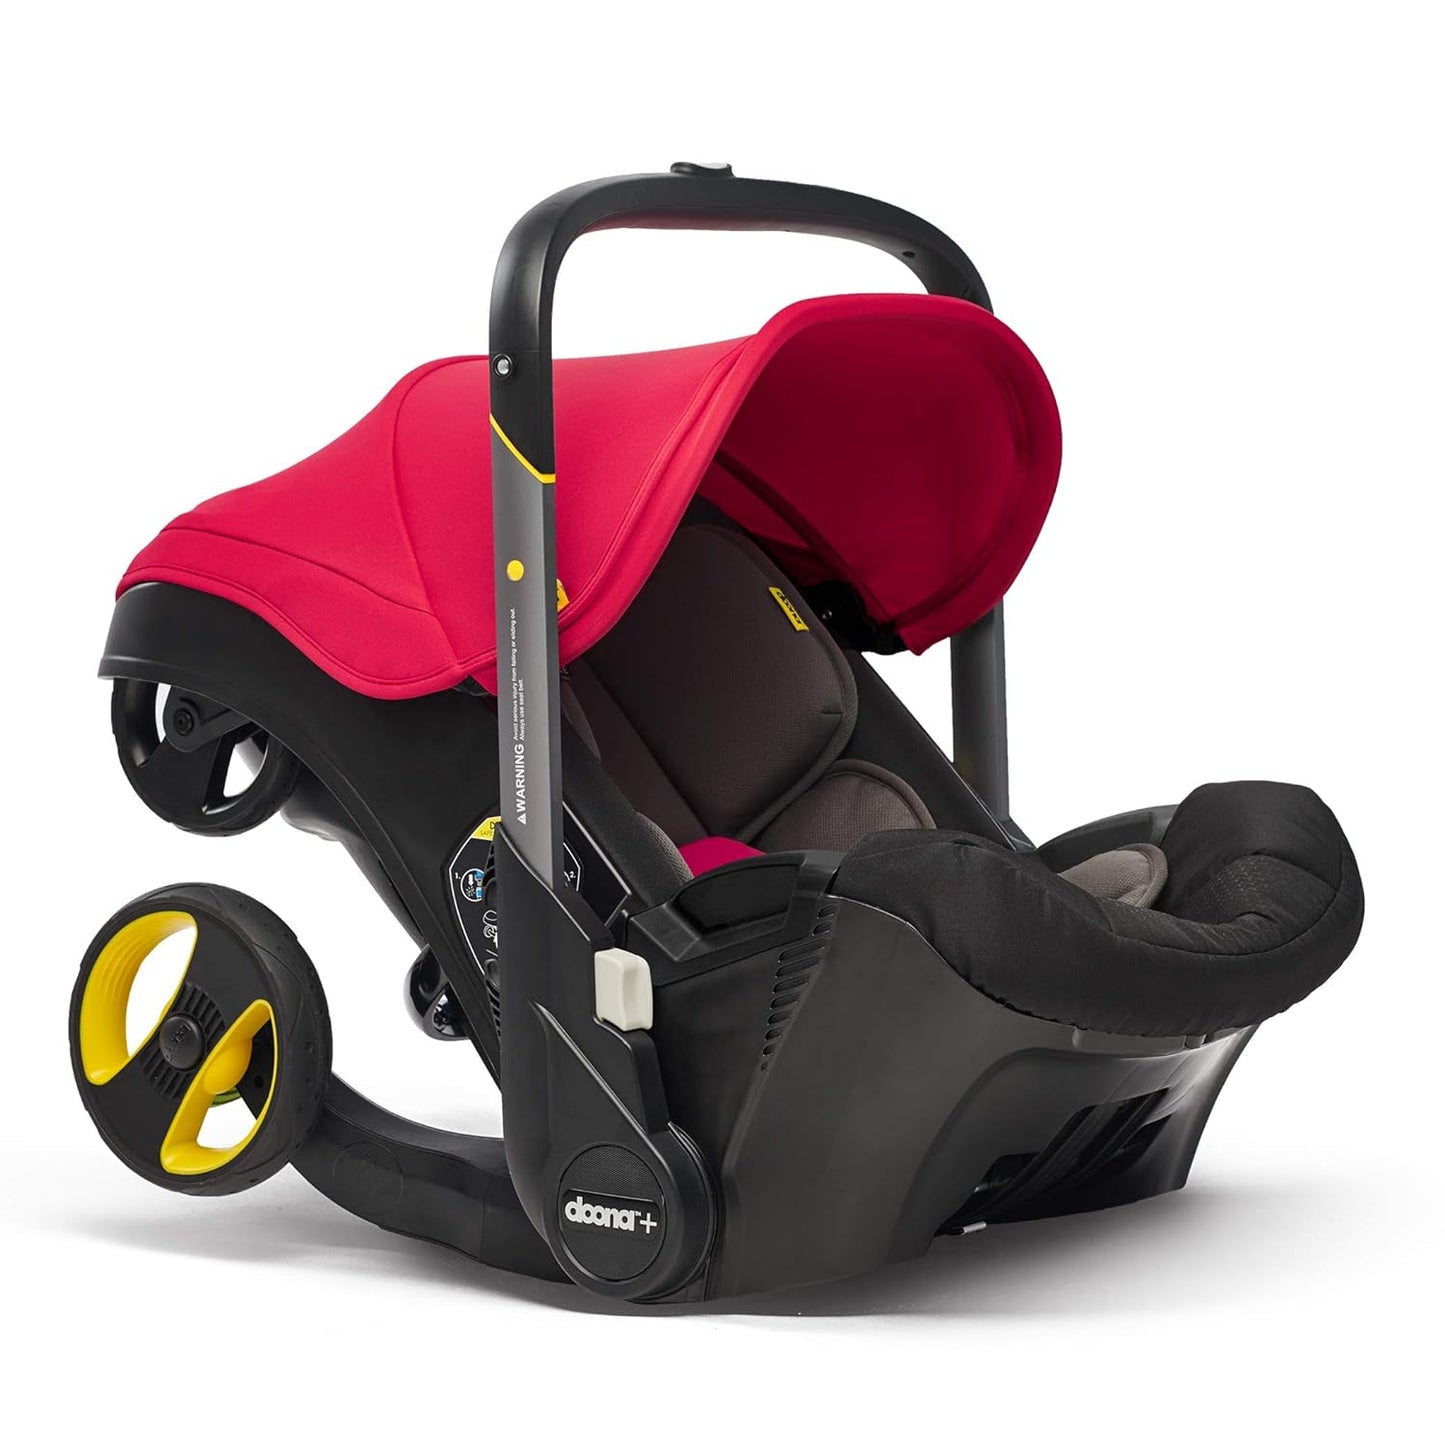 Stroller - Doona Infant Car Seat & Latch Base - Rear Facing ,Car Seat to Stroller in Seconds - US Version, Desert Green